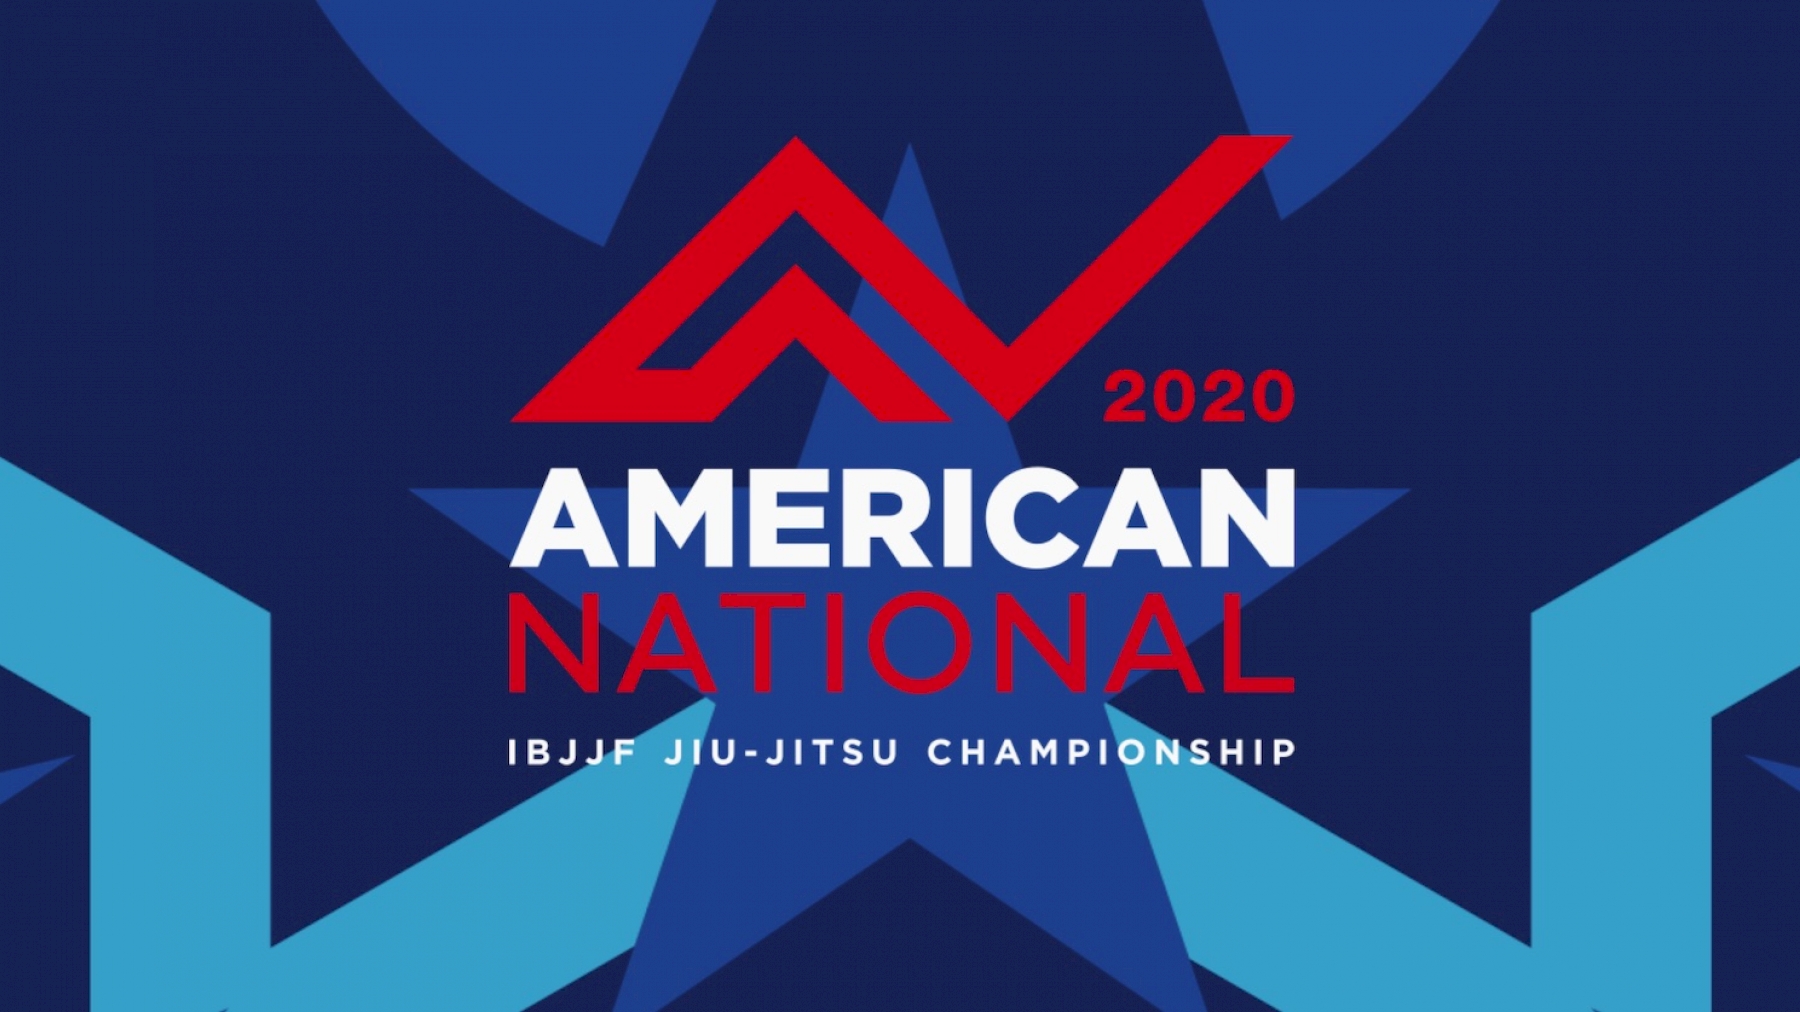 2020 American National IBJJF JiuJitsu Championship Grappling Event